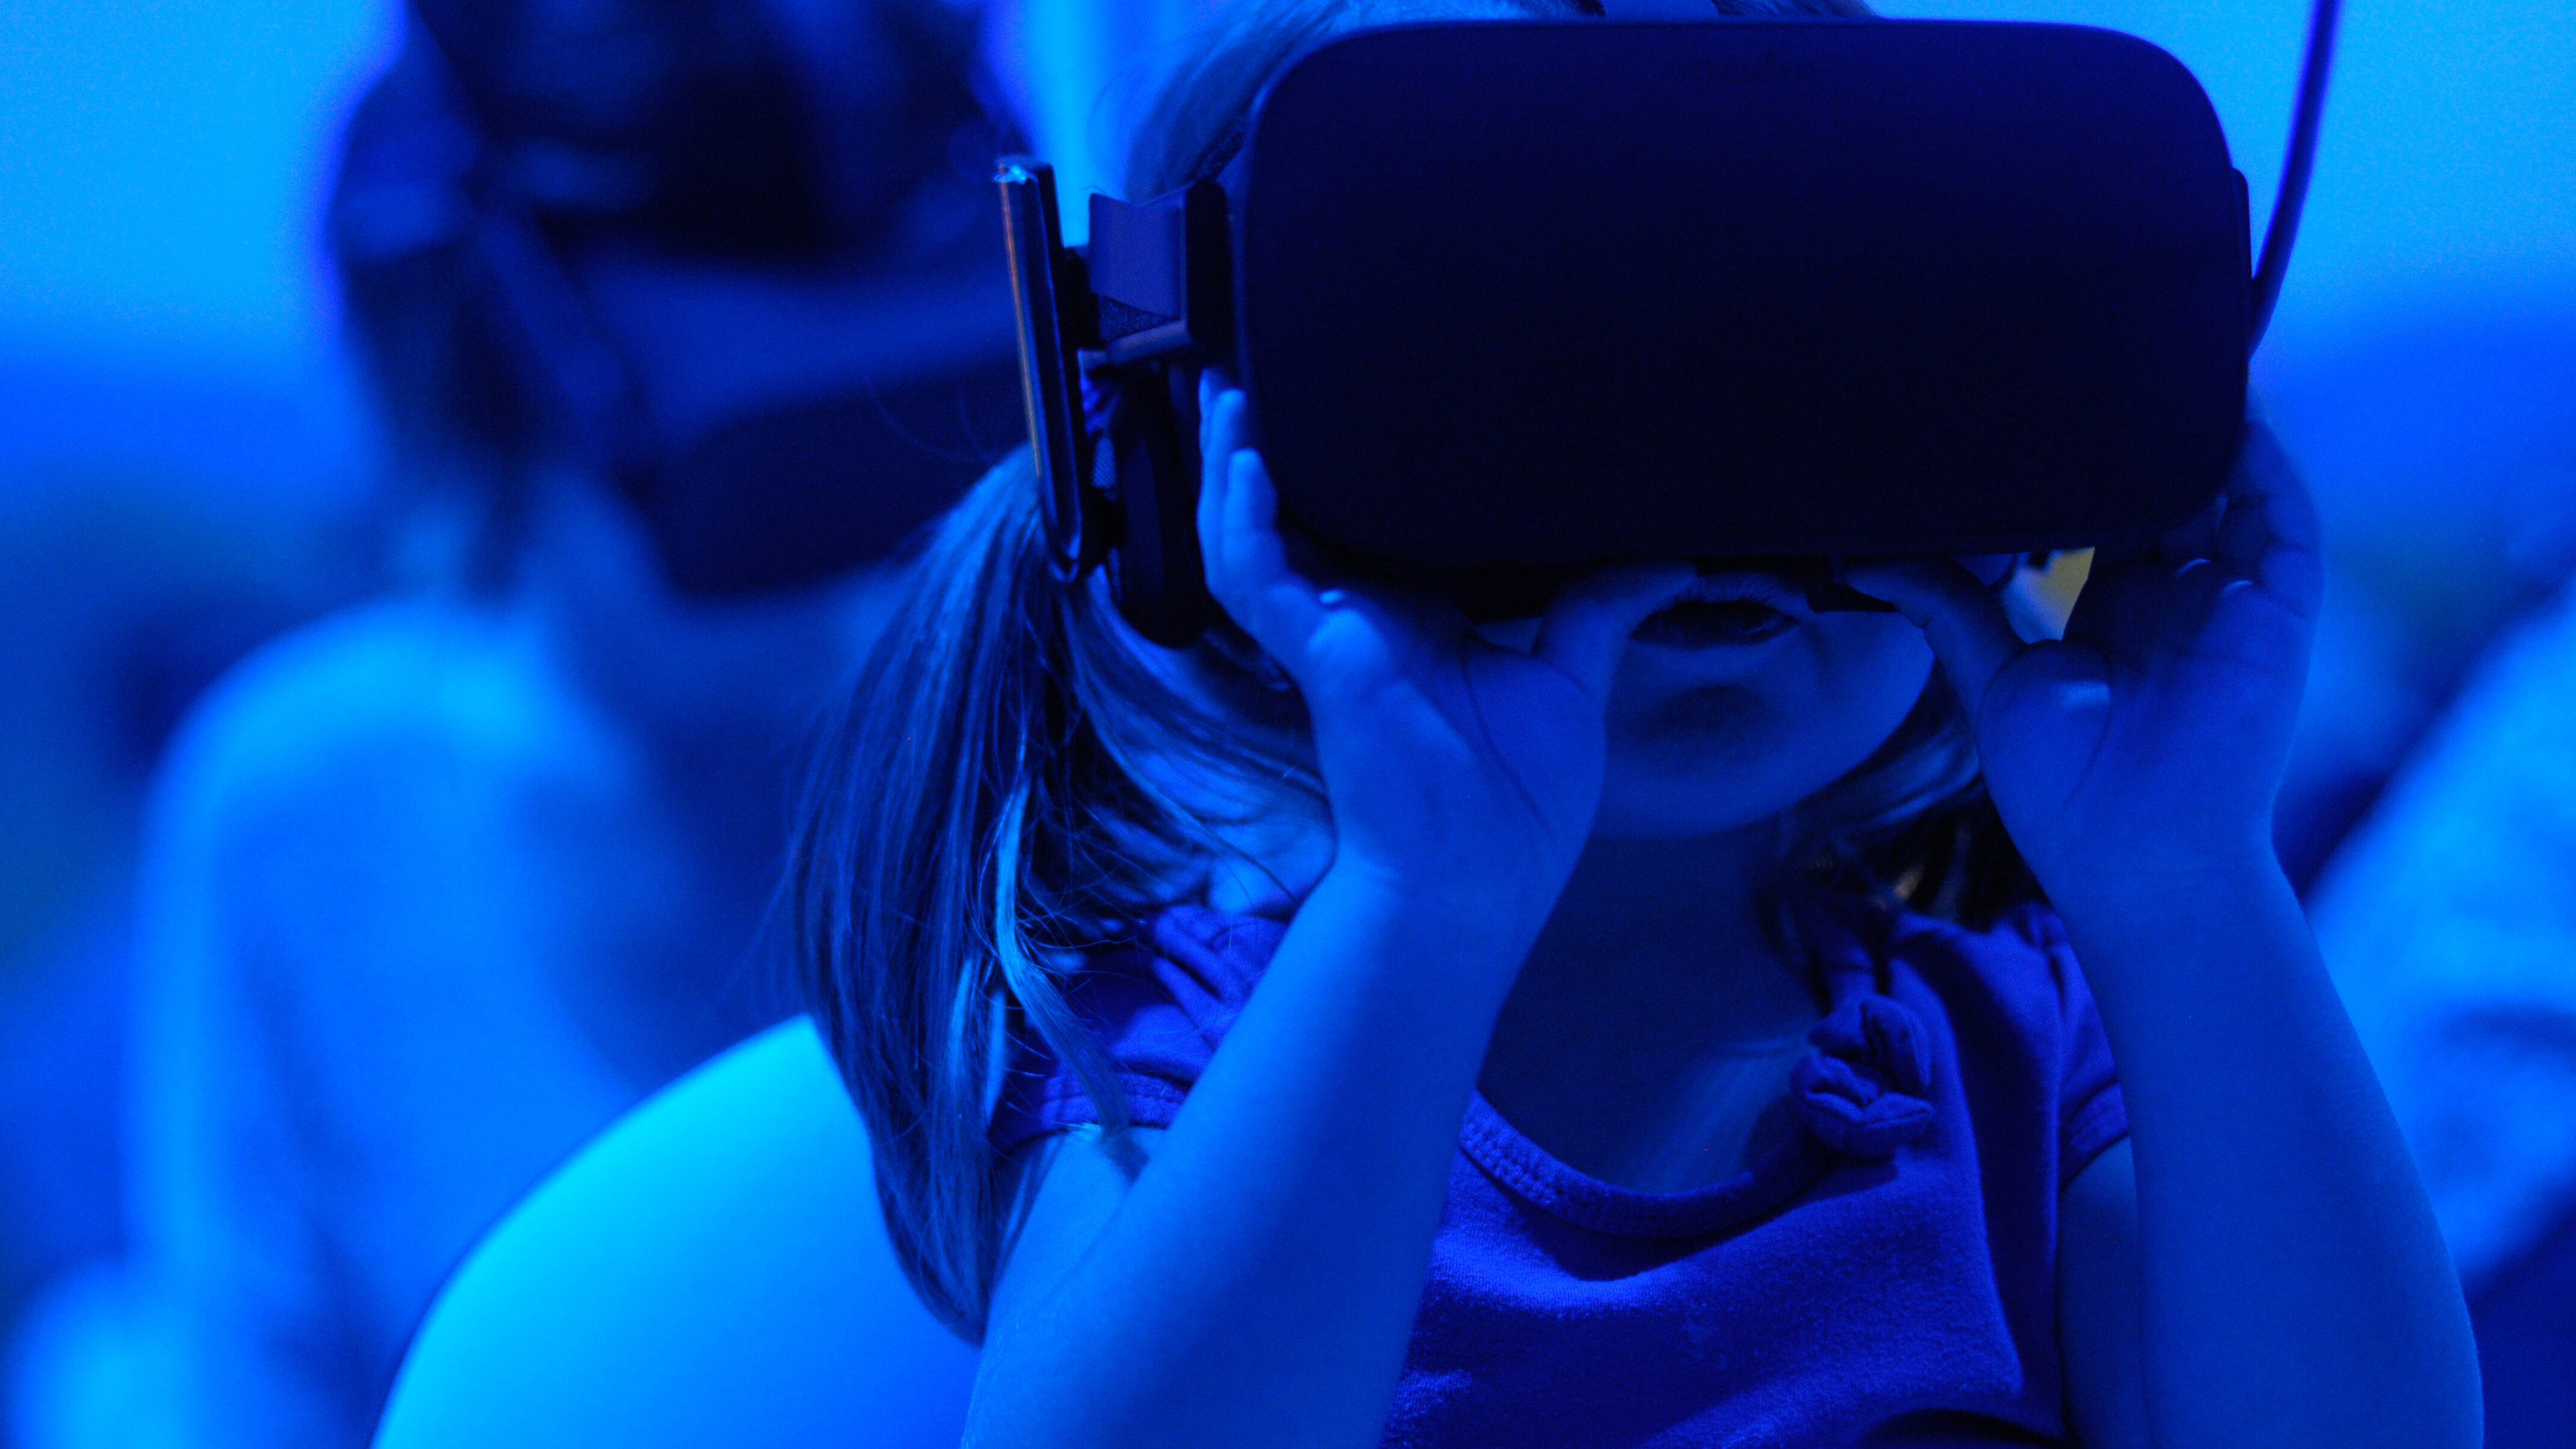 Ein Kind schaut durch eine Virtual-Reality-Brille / A child looking through virtual reality goggles